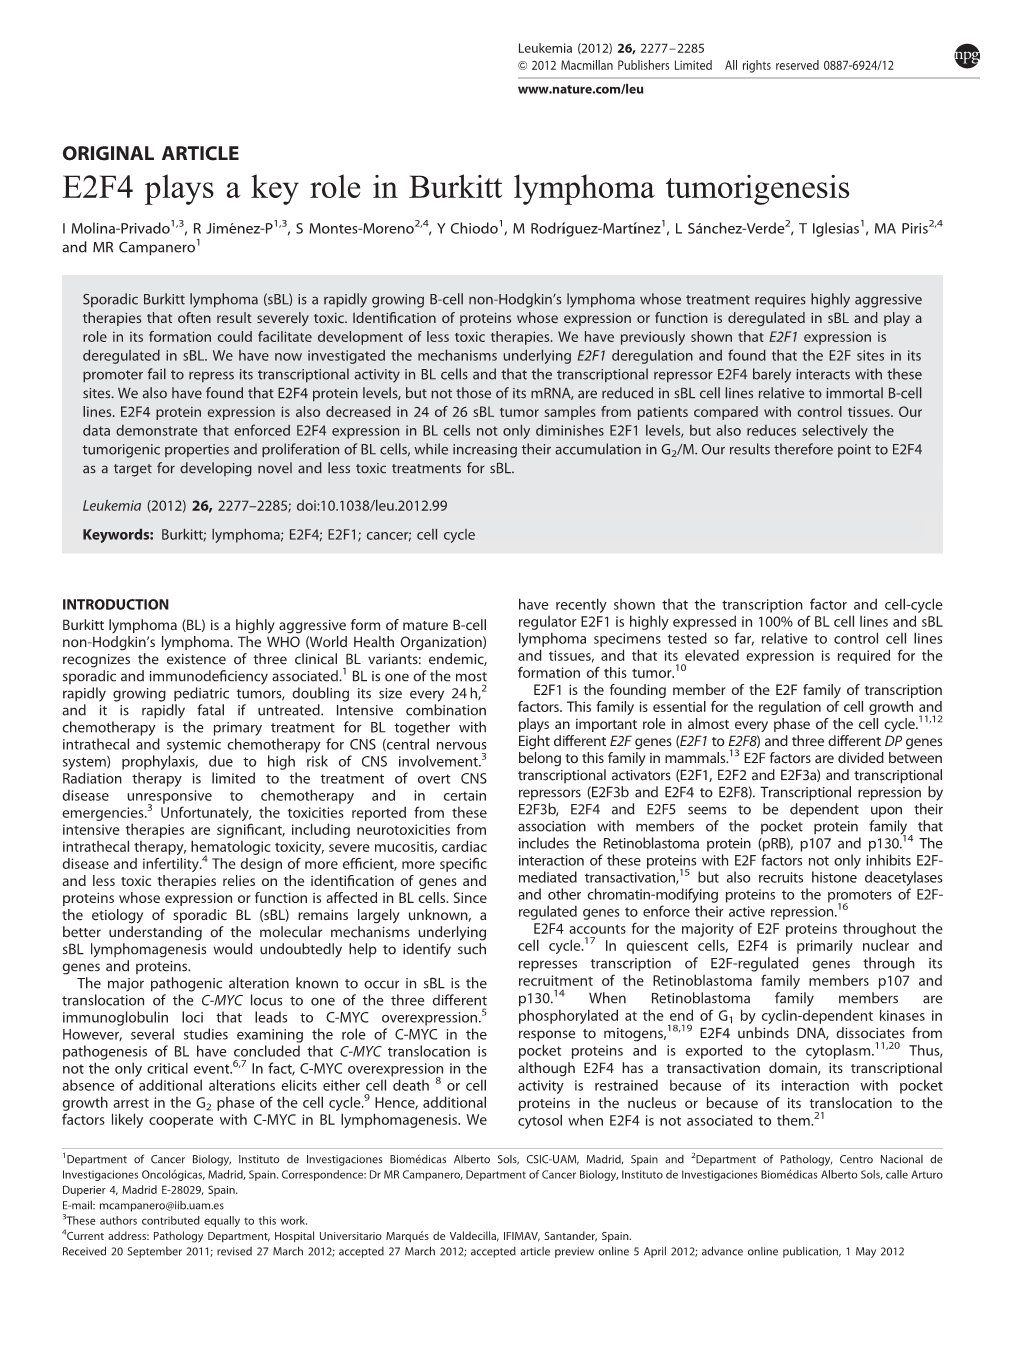 E2F4 Plays a Key Role in Burkitt Lymphoma Tumorigenesis